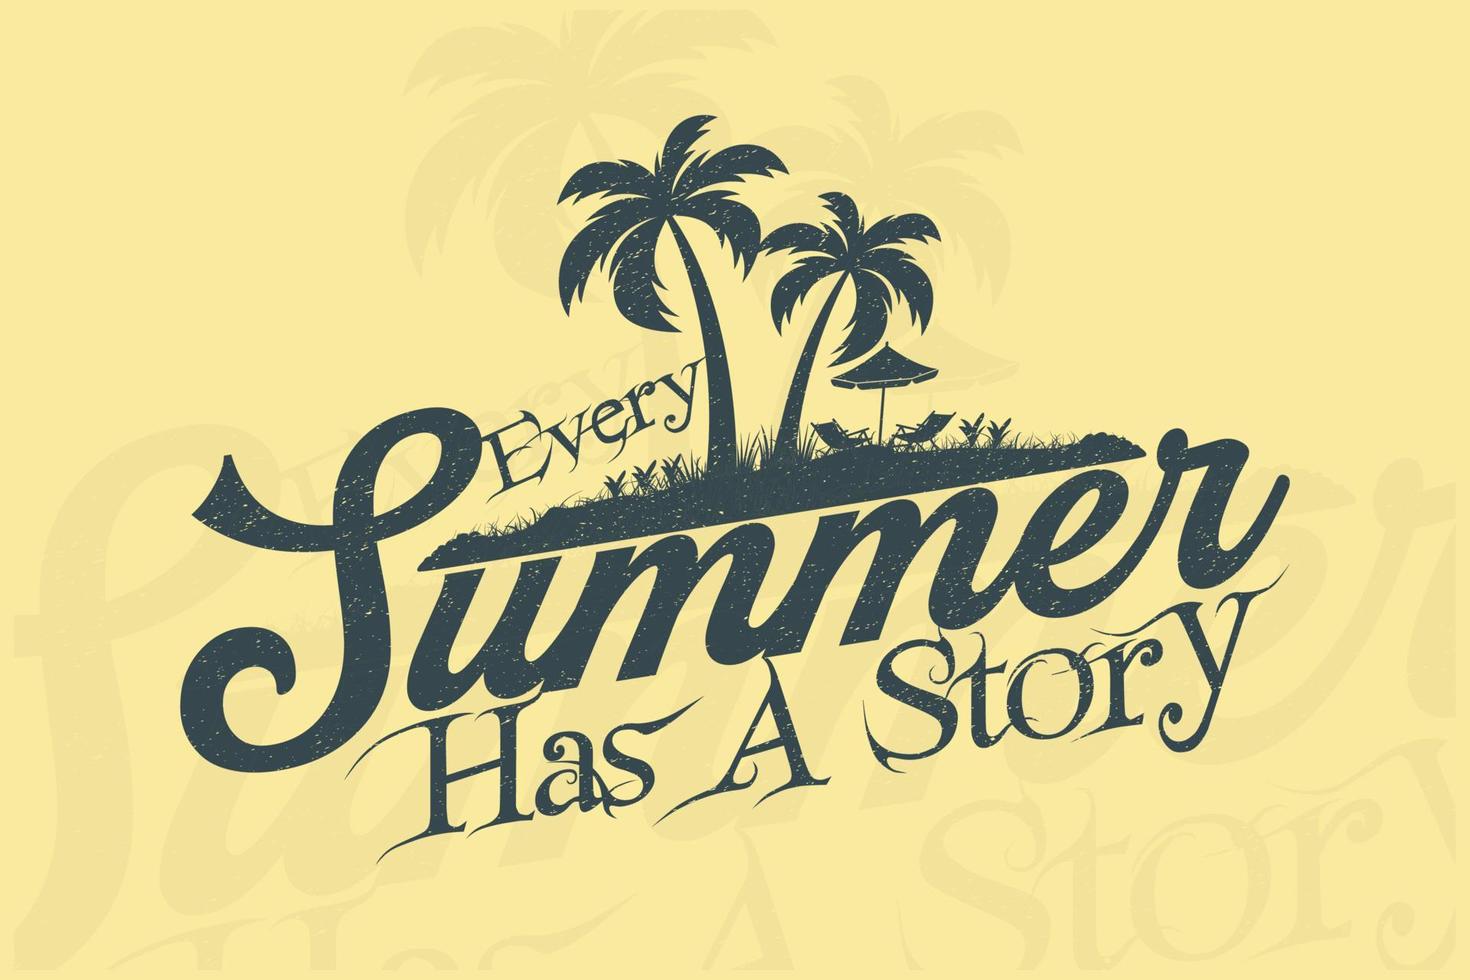 Every summer has a story t shirt design vector